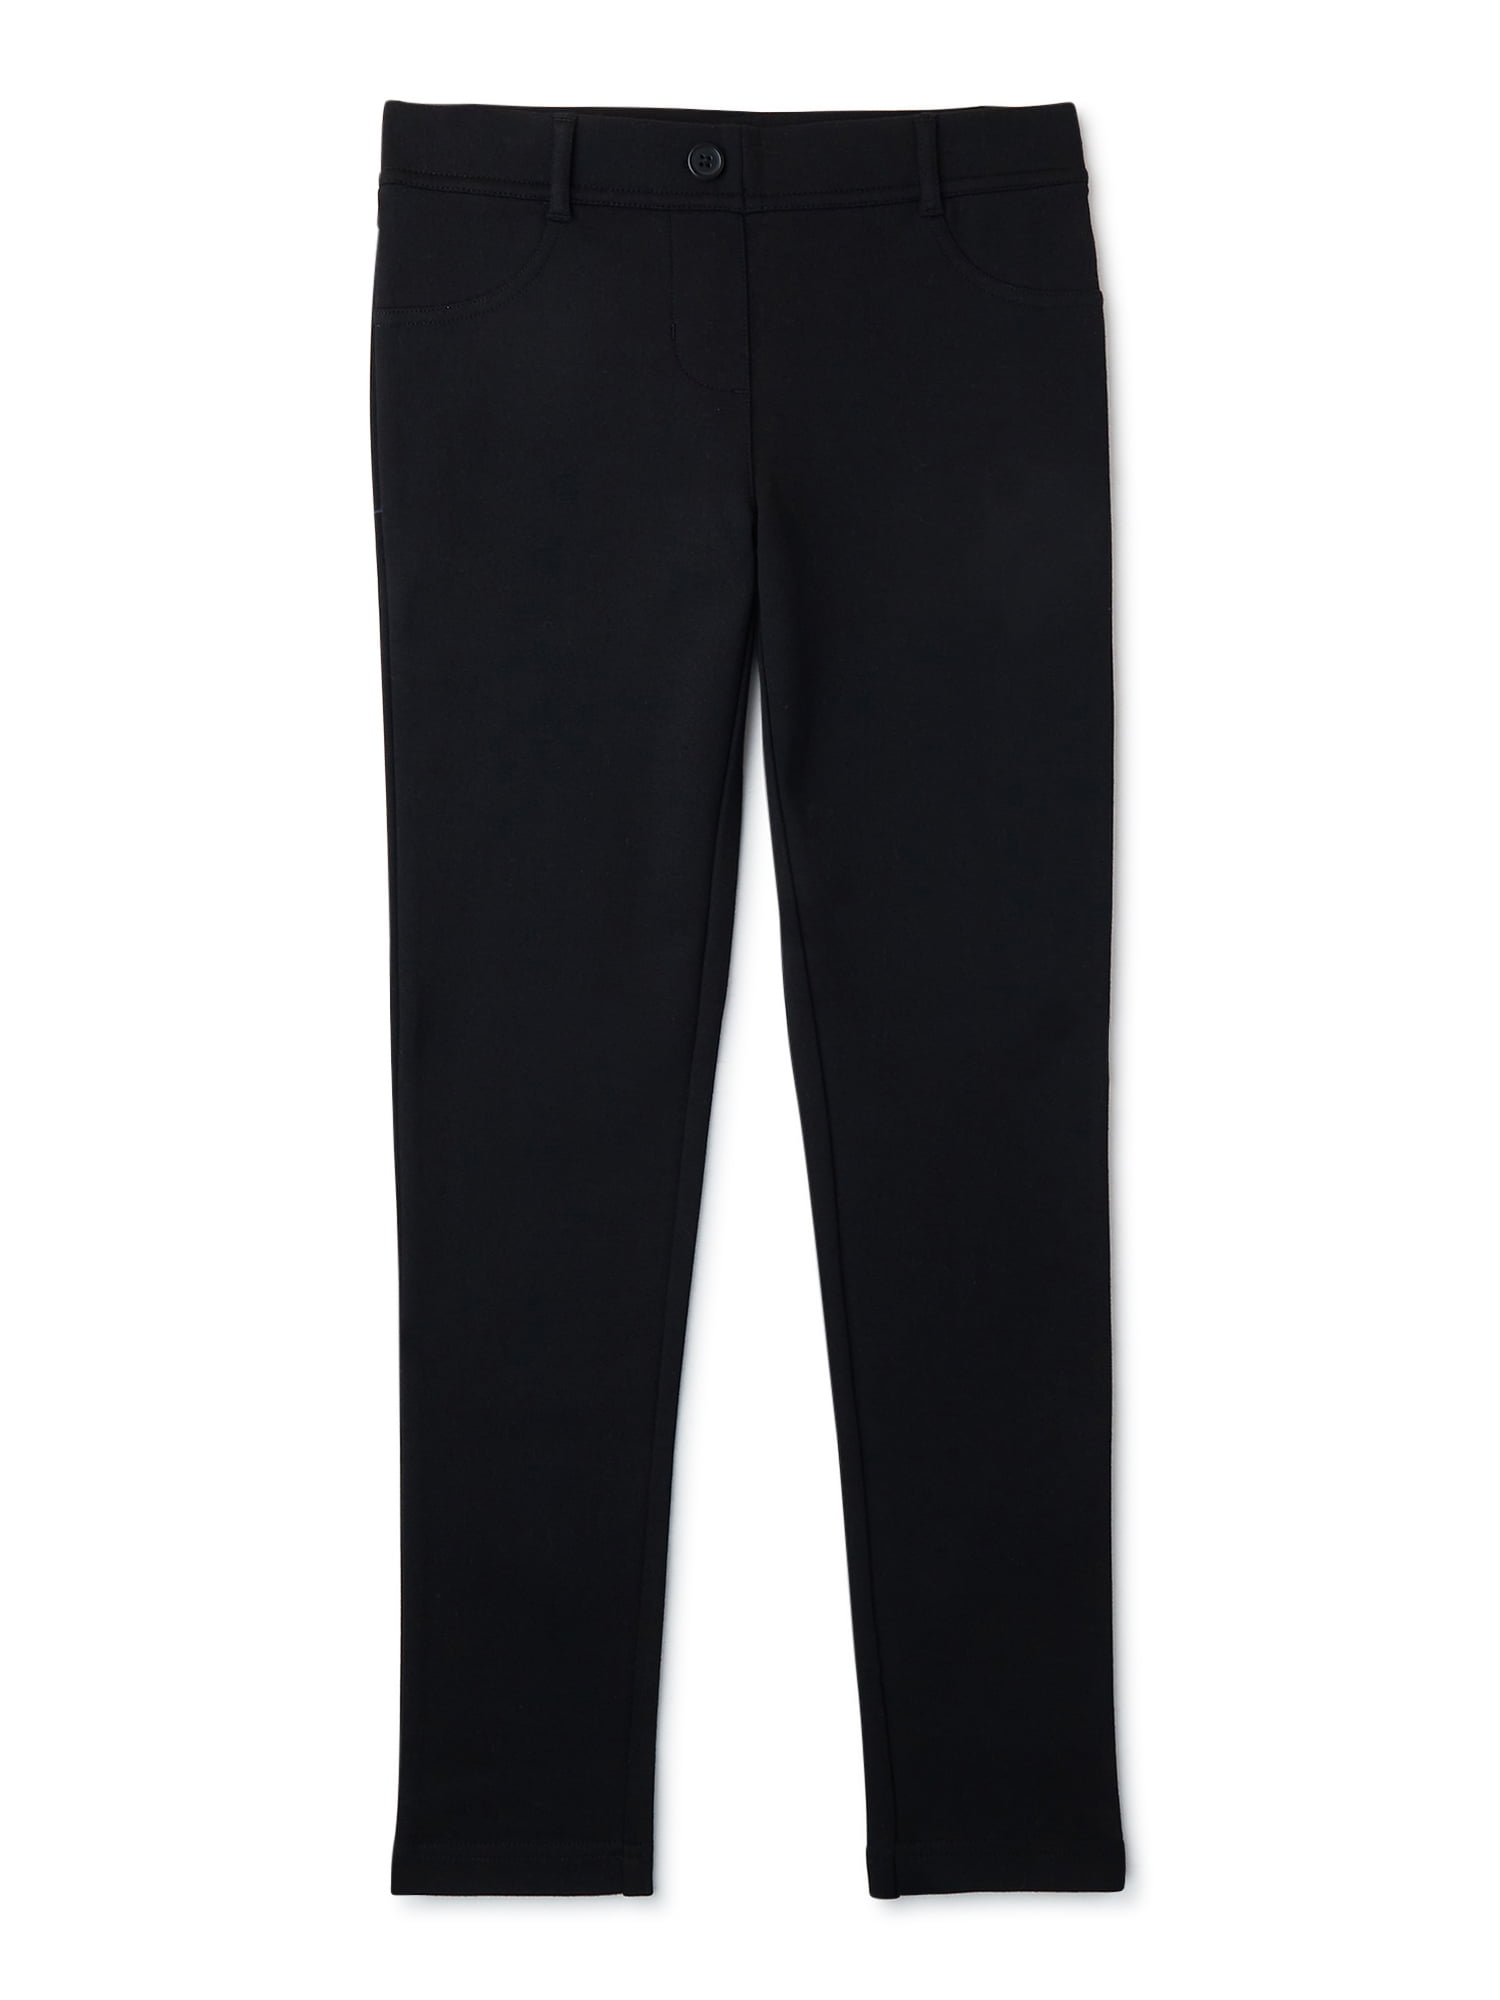 U.S Girls' School Uniform Pants 2 Pack Ponte Stretch Jegging Khaki Pants Size: 4-16 Polo Assn 